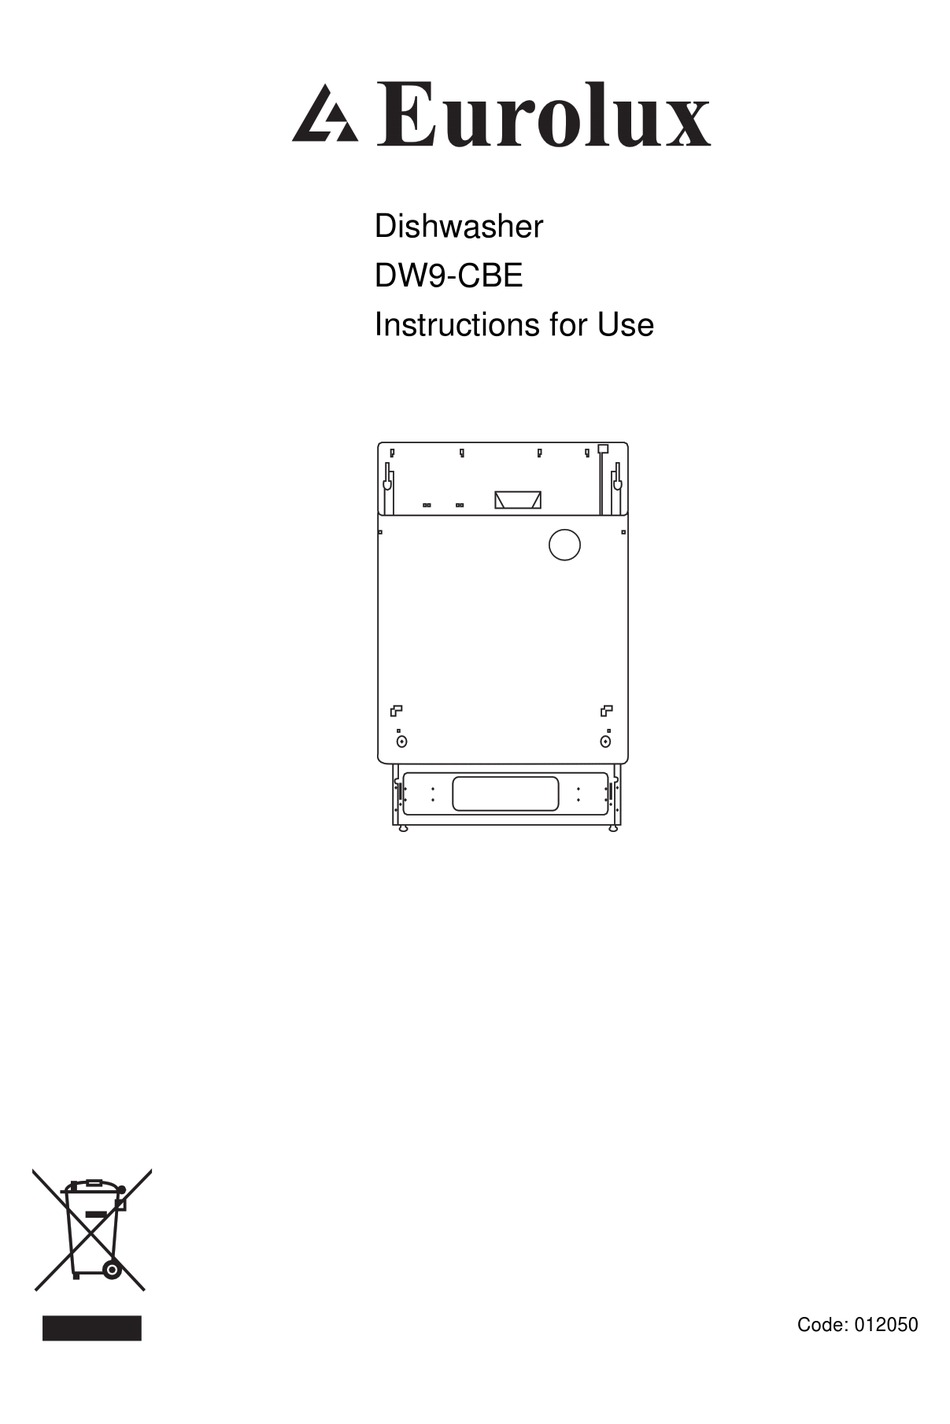 integrated dishwasher dw009 manual